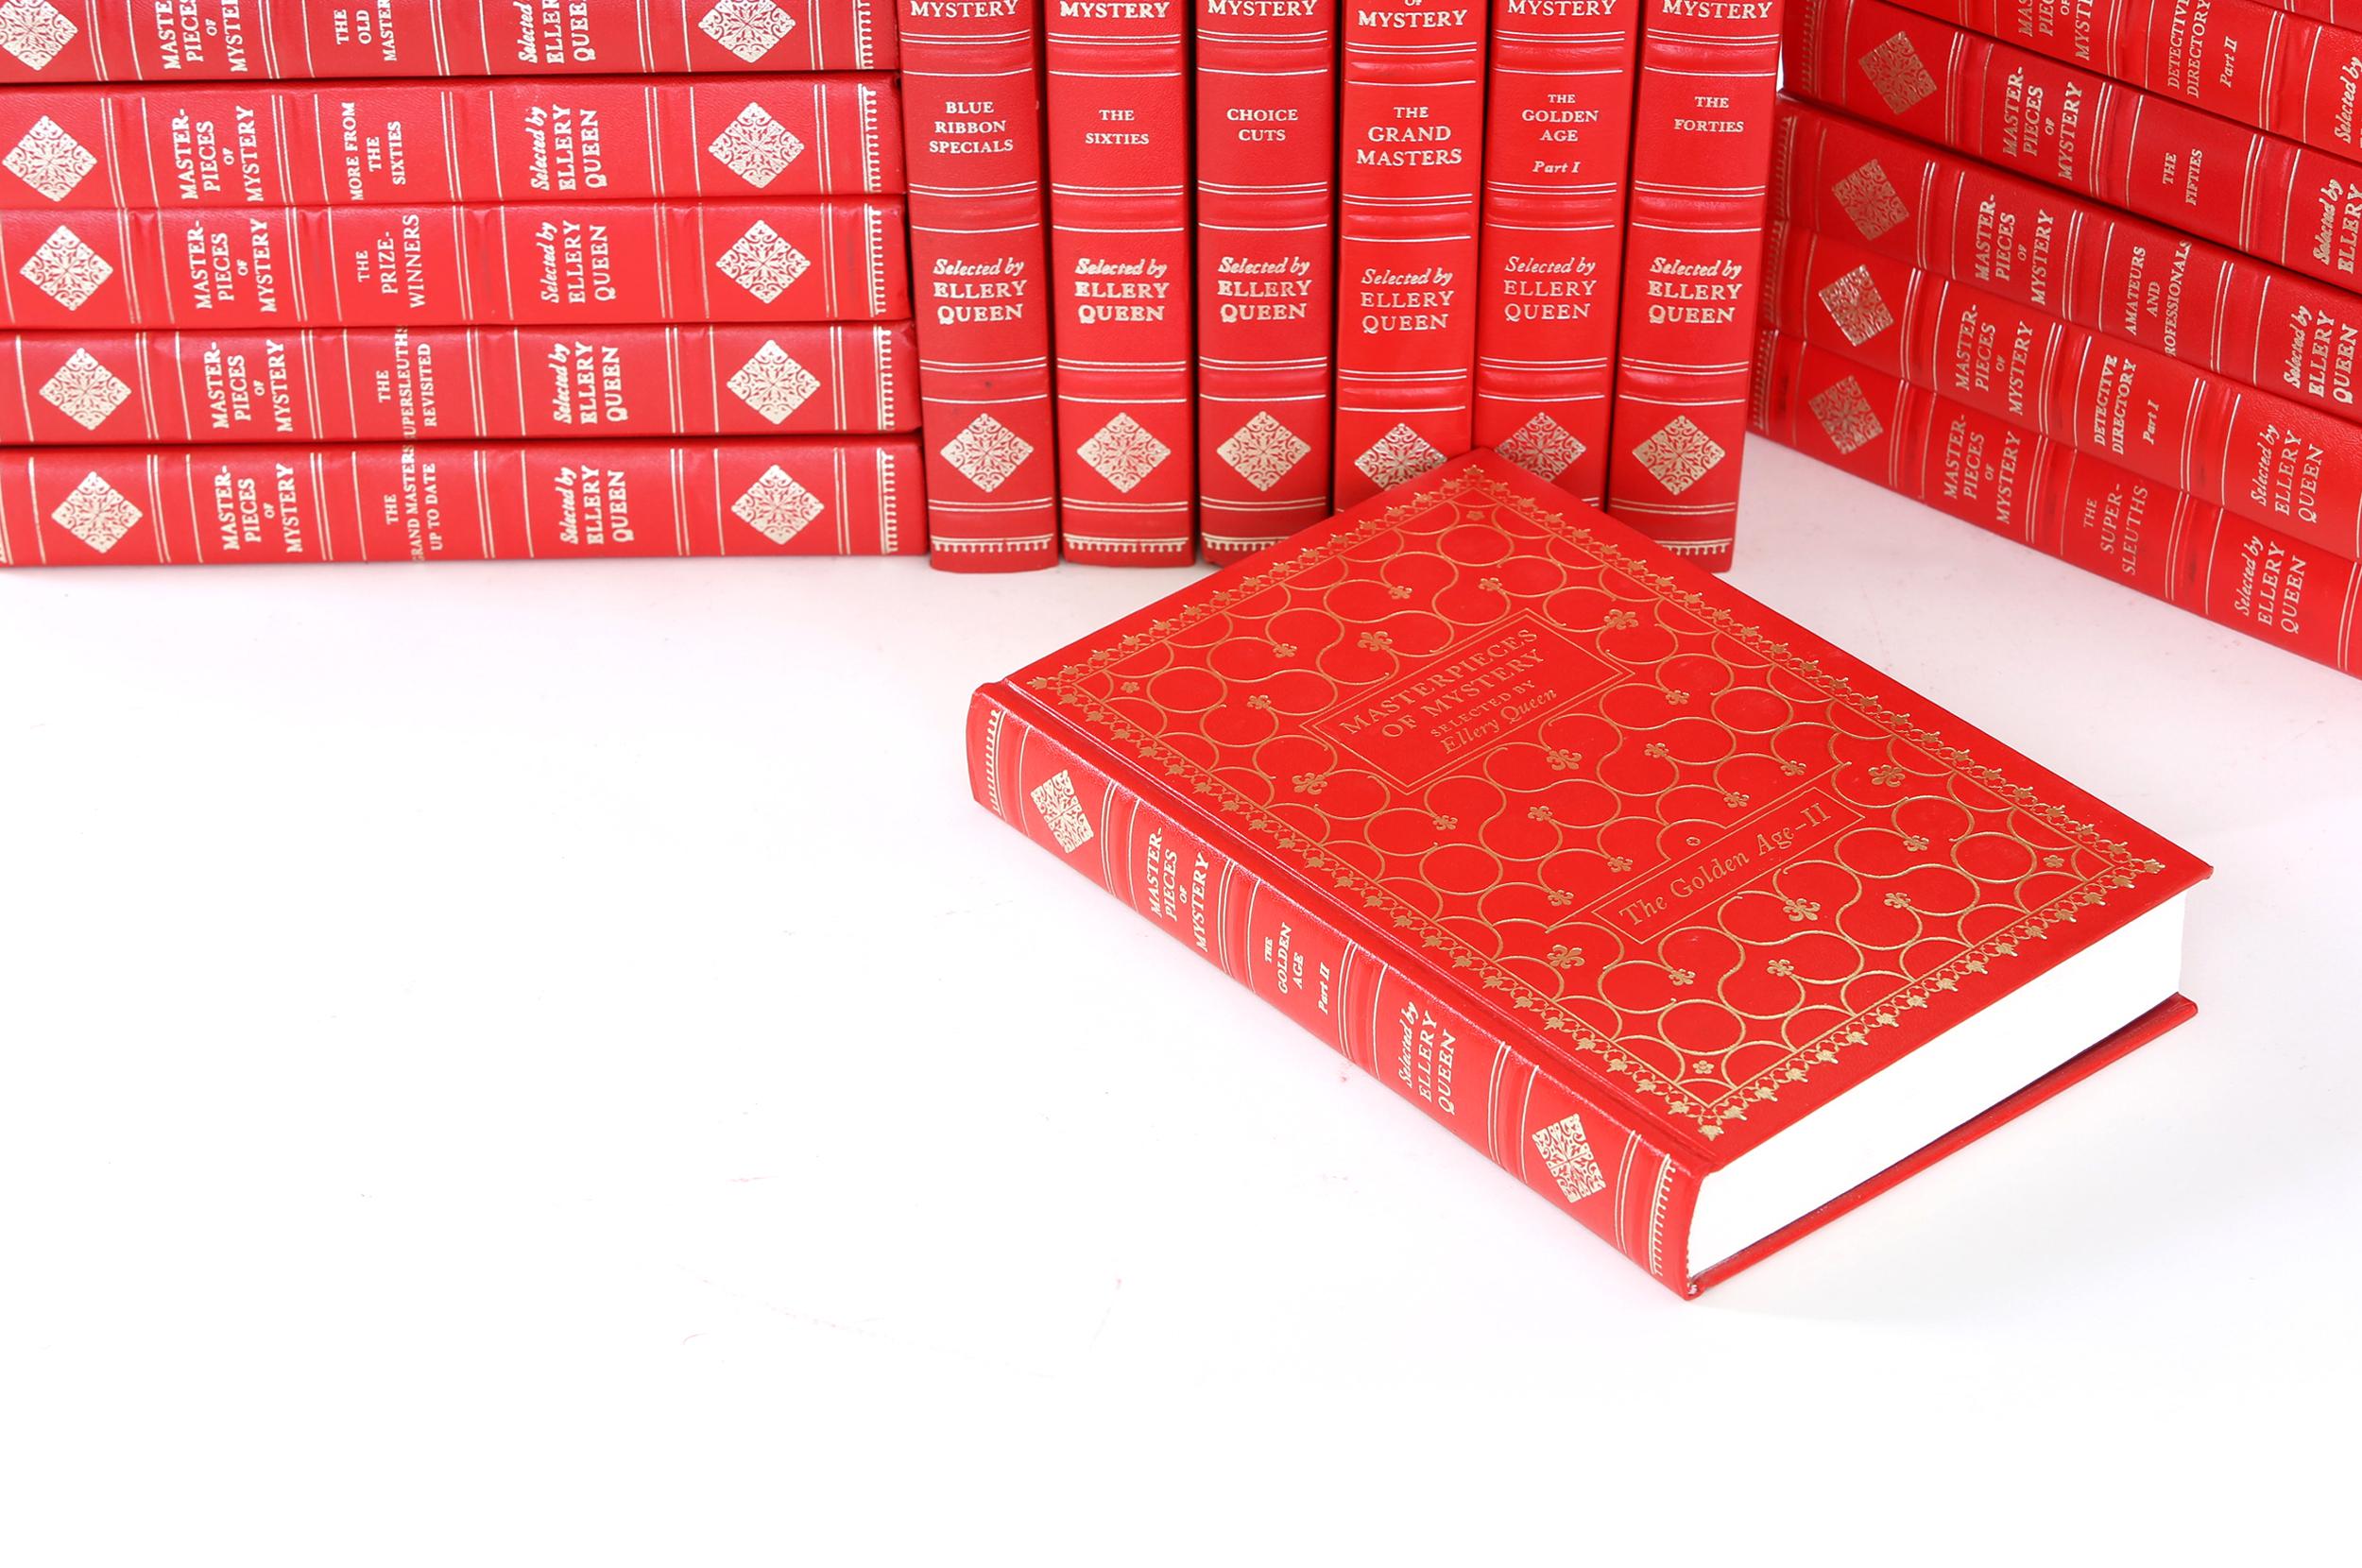 Gold Collection Gilt Leather Bound Books / Twenty Volumes